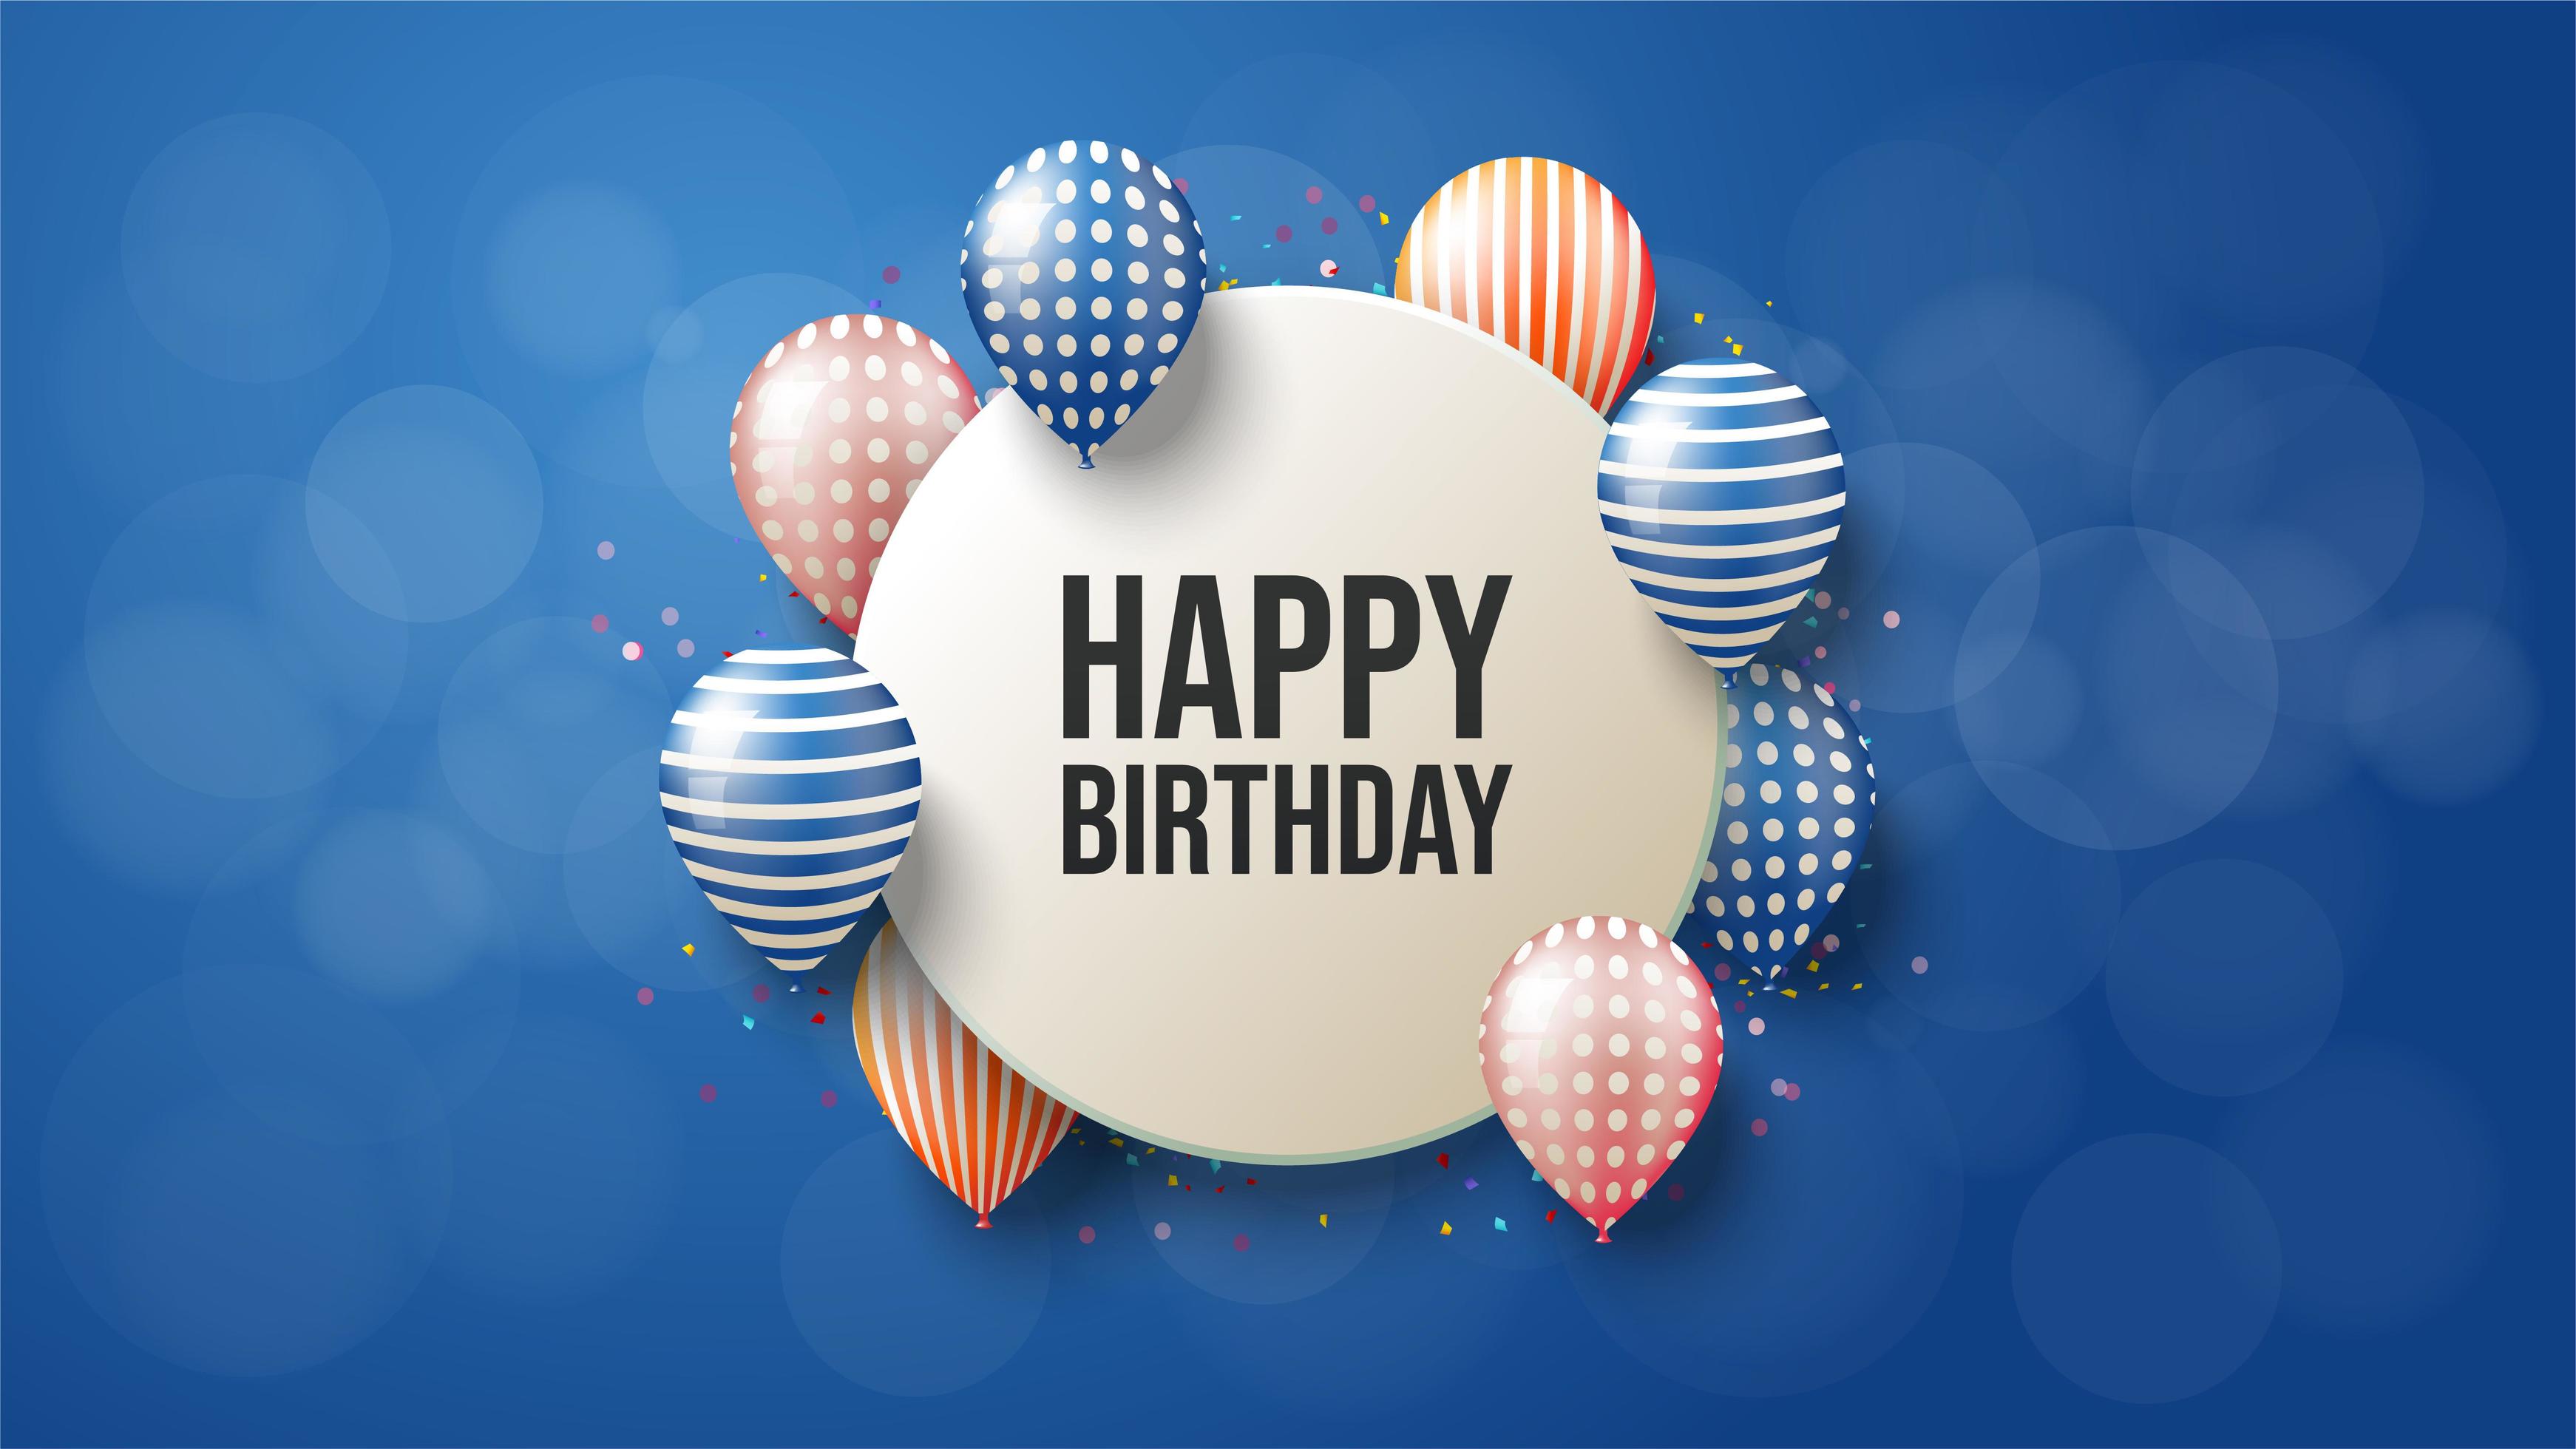 Circular Happy Birthday Background Download Free Vectors Clipart